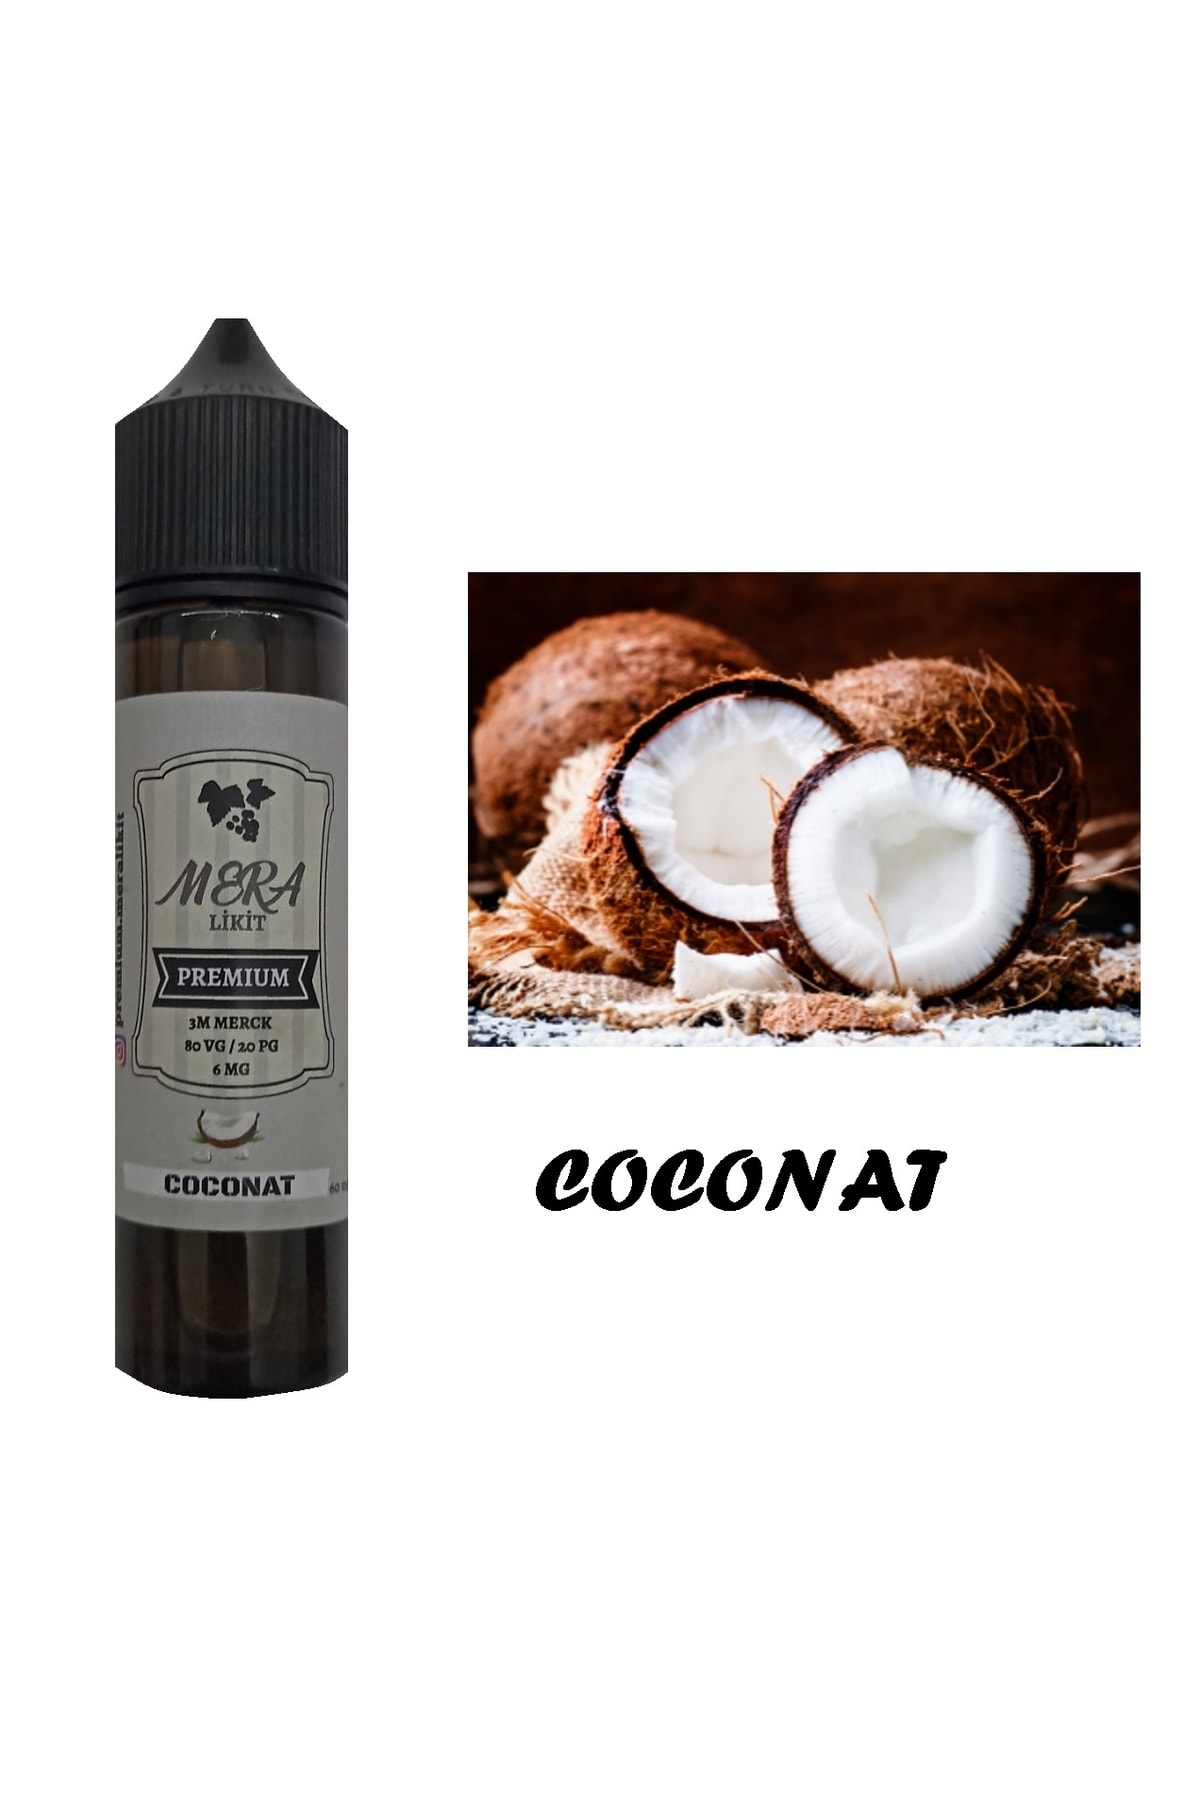 Mera Likit Coconat Aromalı Likit 60 Ml - 3m Merck 80vg/20pg Premium 6mg